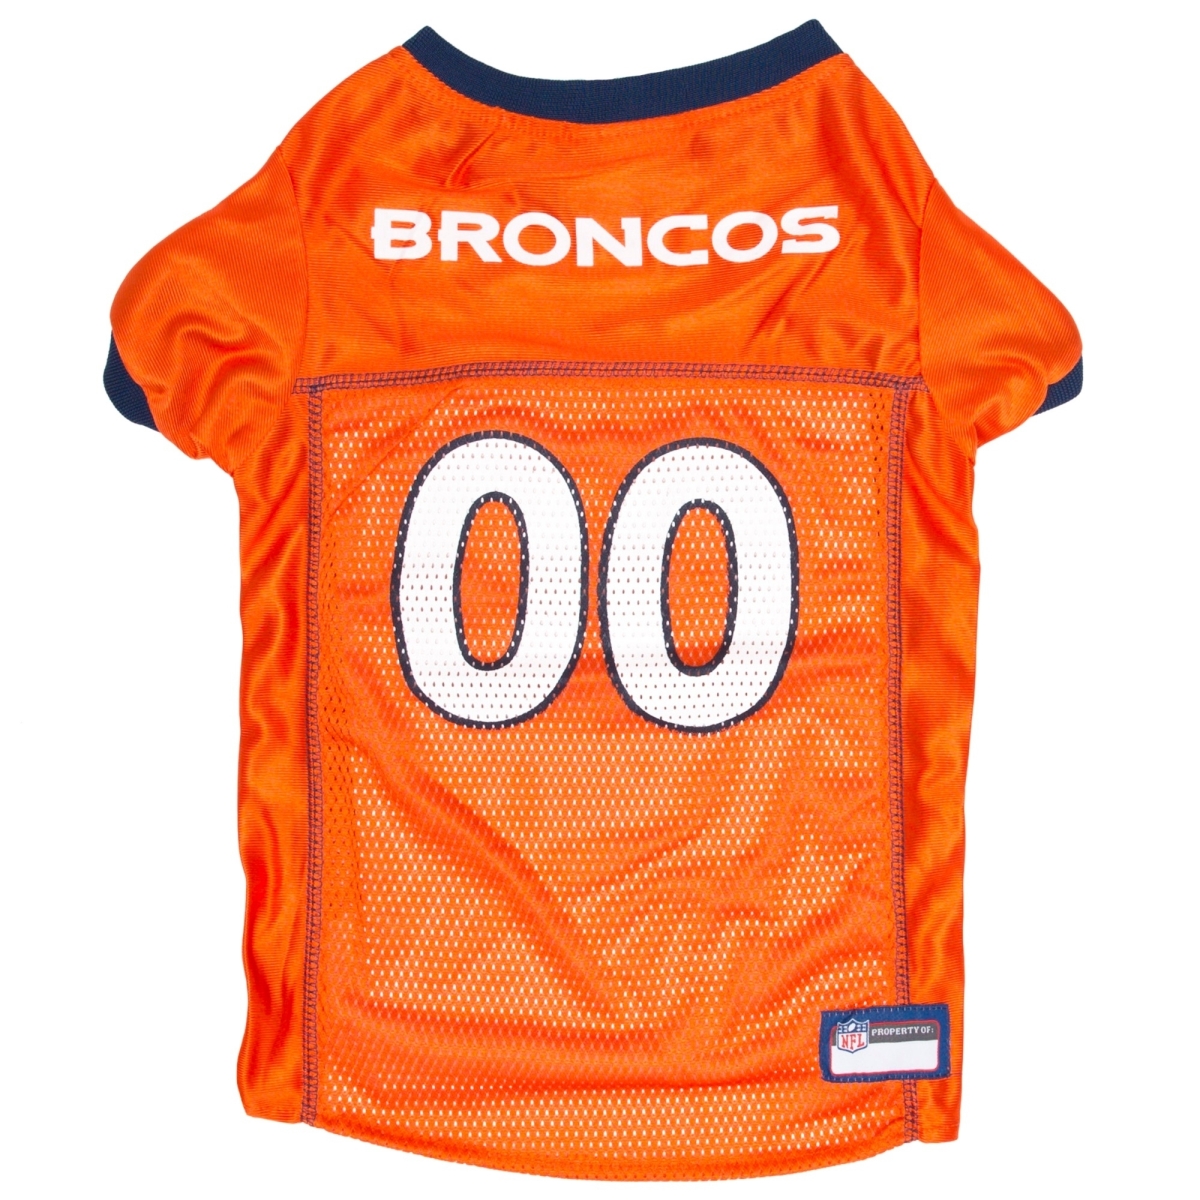 Dgden-4006-s Denver Broncos Dog Jersey, Orange - Small